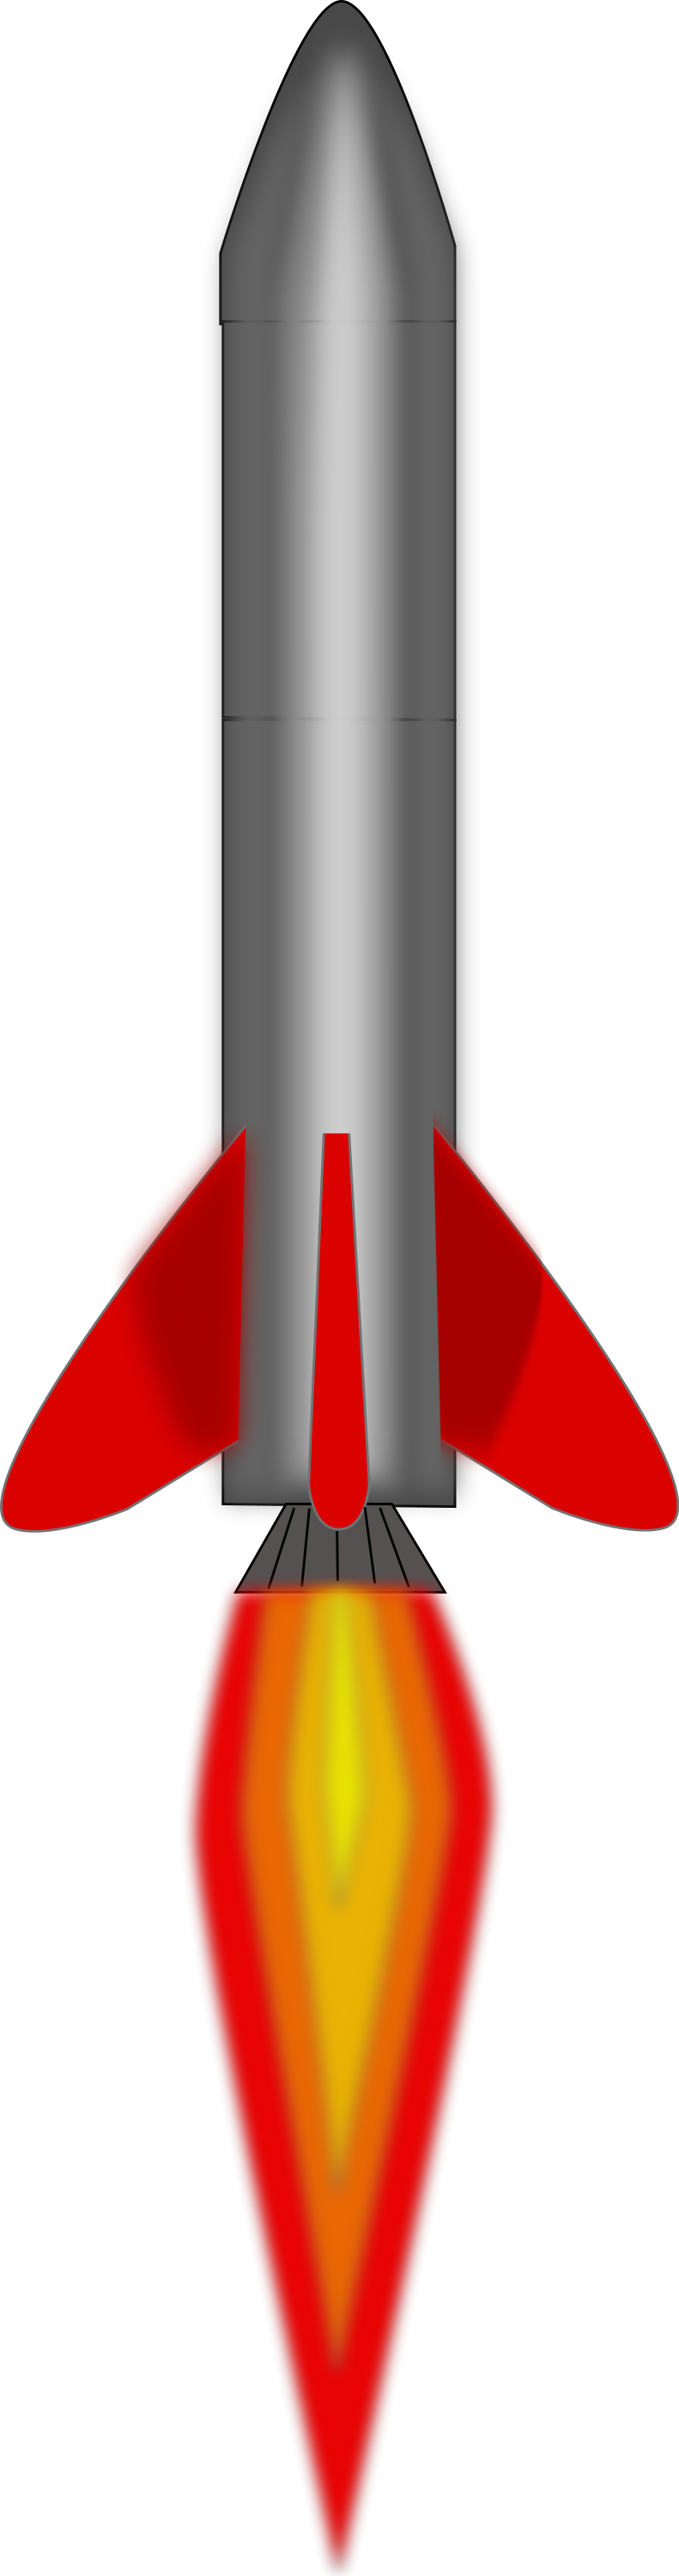 Rocket   Free Stock Photo   Illustration Of A Red Rocket     16619